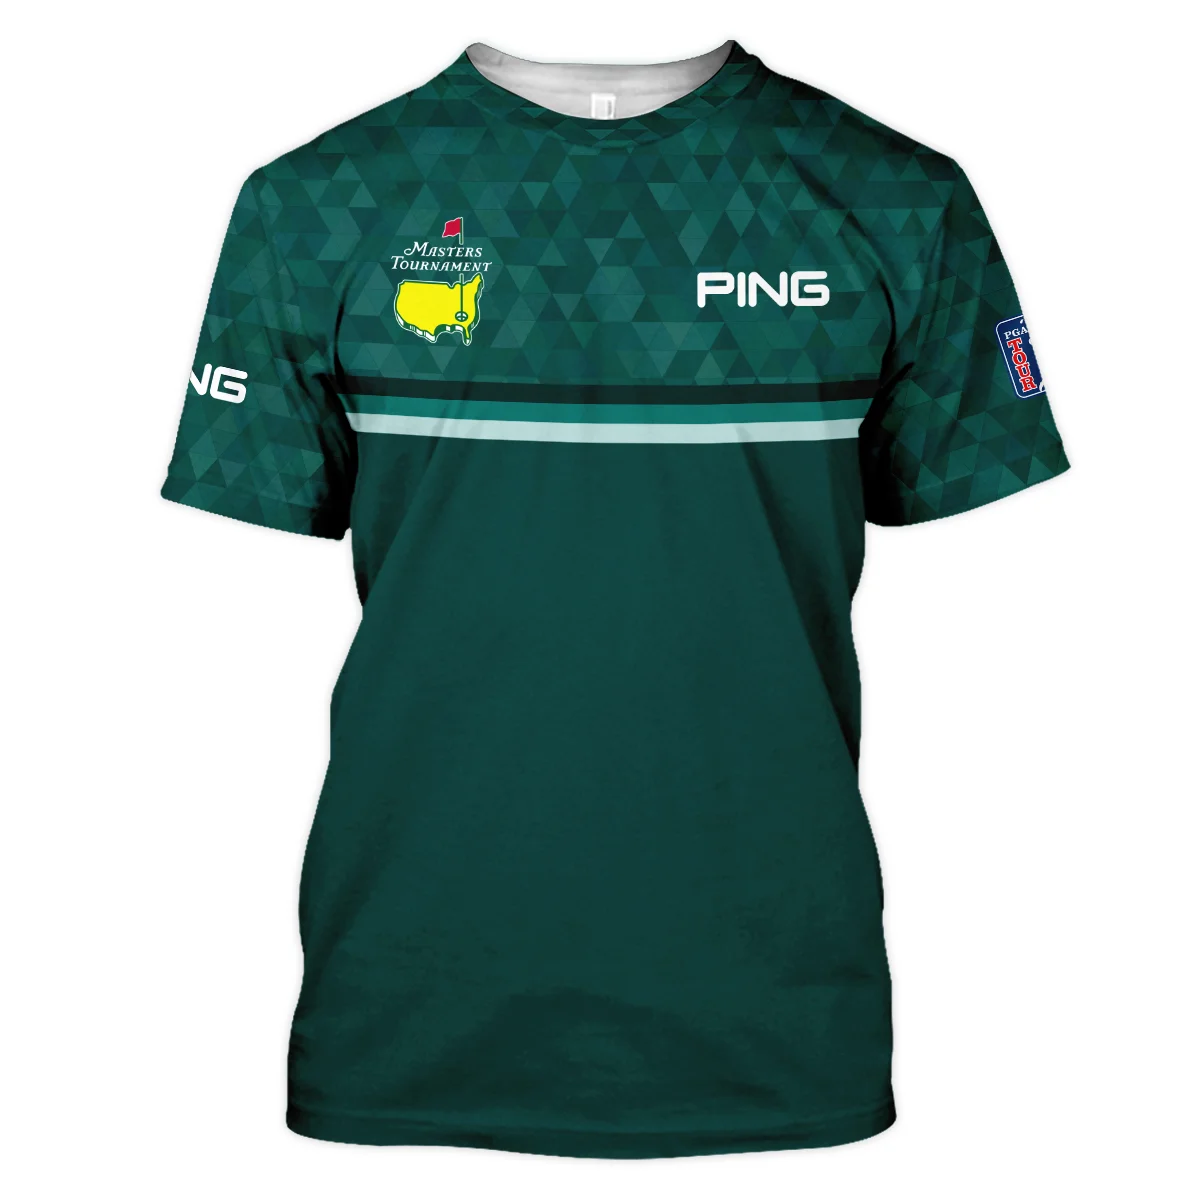 Dark Green Triangle Mosaic Pattern Masters Tournament Ping Unisex T-Shirt Style Classic T-Shirt